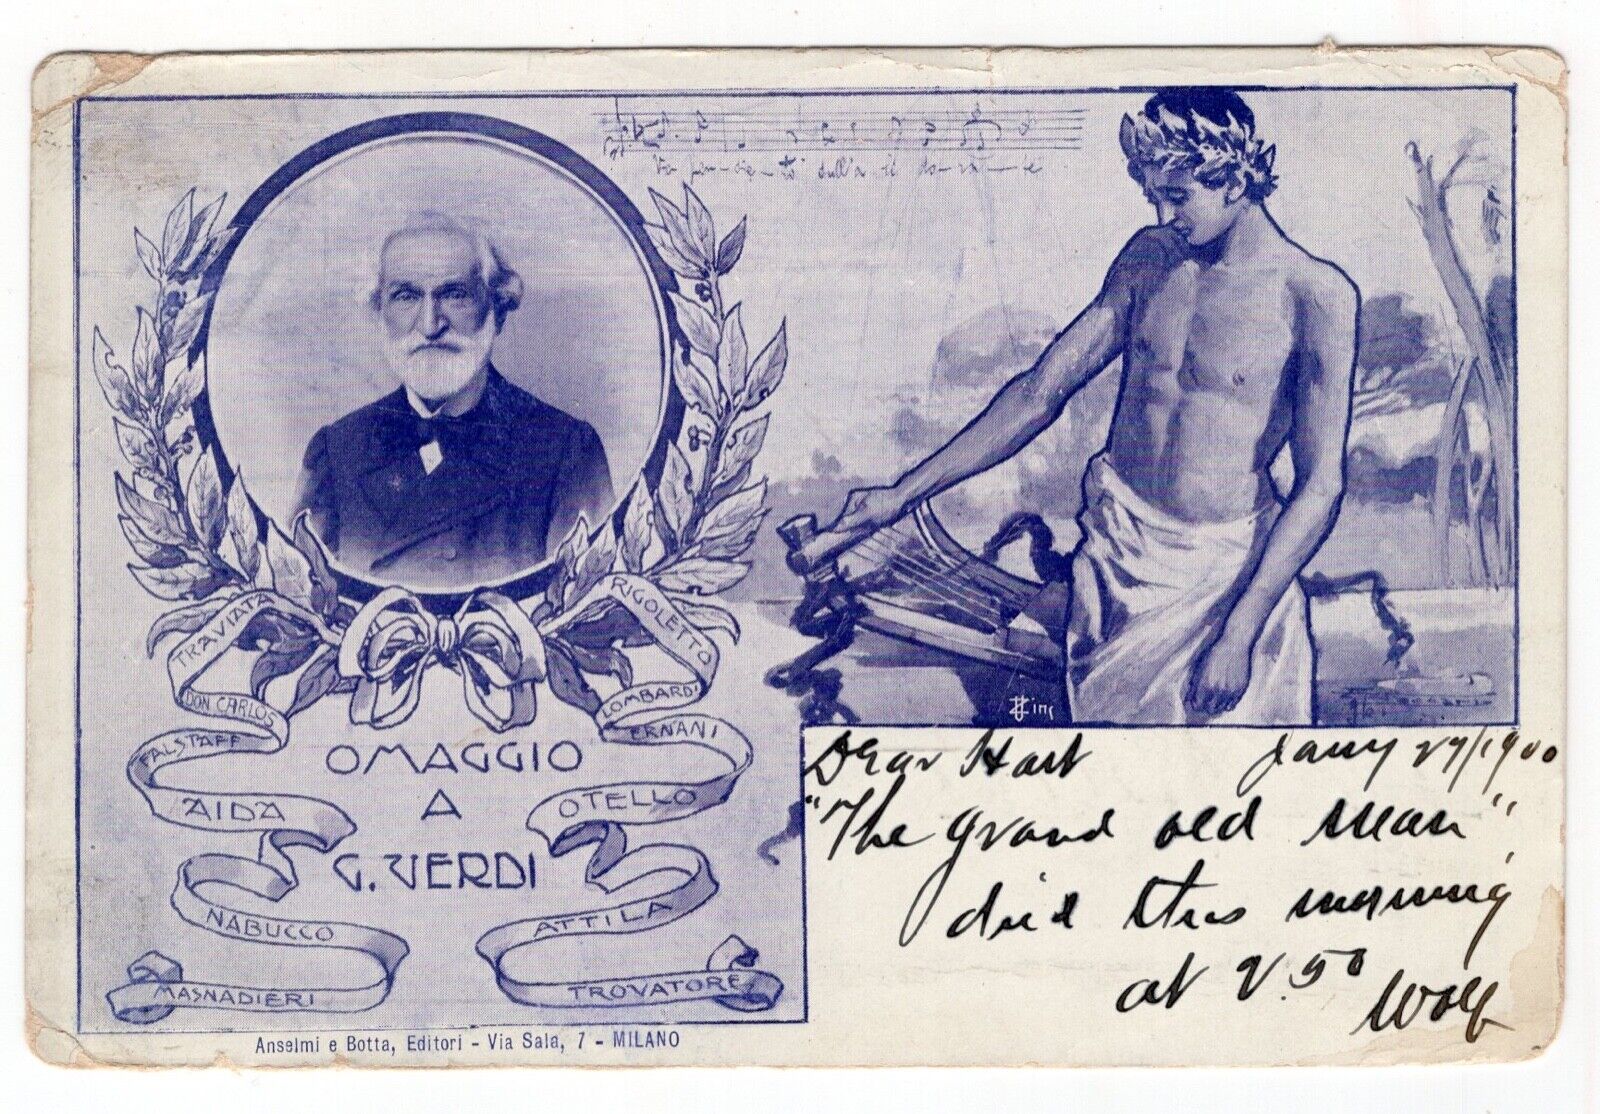 GIUSEPPE VERDI POSTCARD POSTALLY USED THE DAY HE DIED, JANUARY 27th, 1901